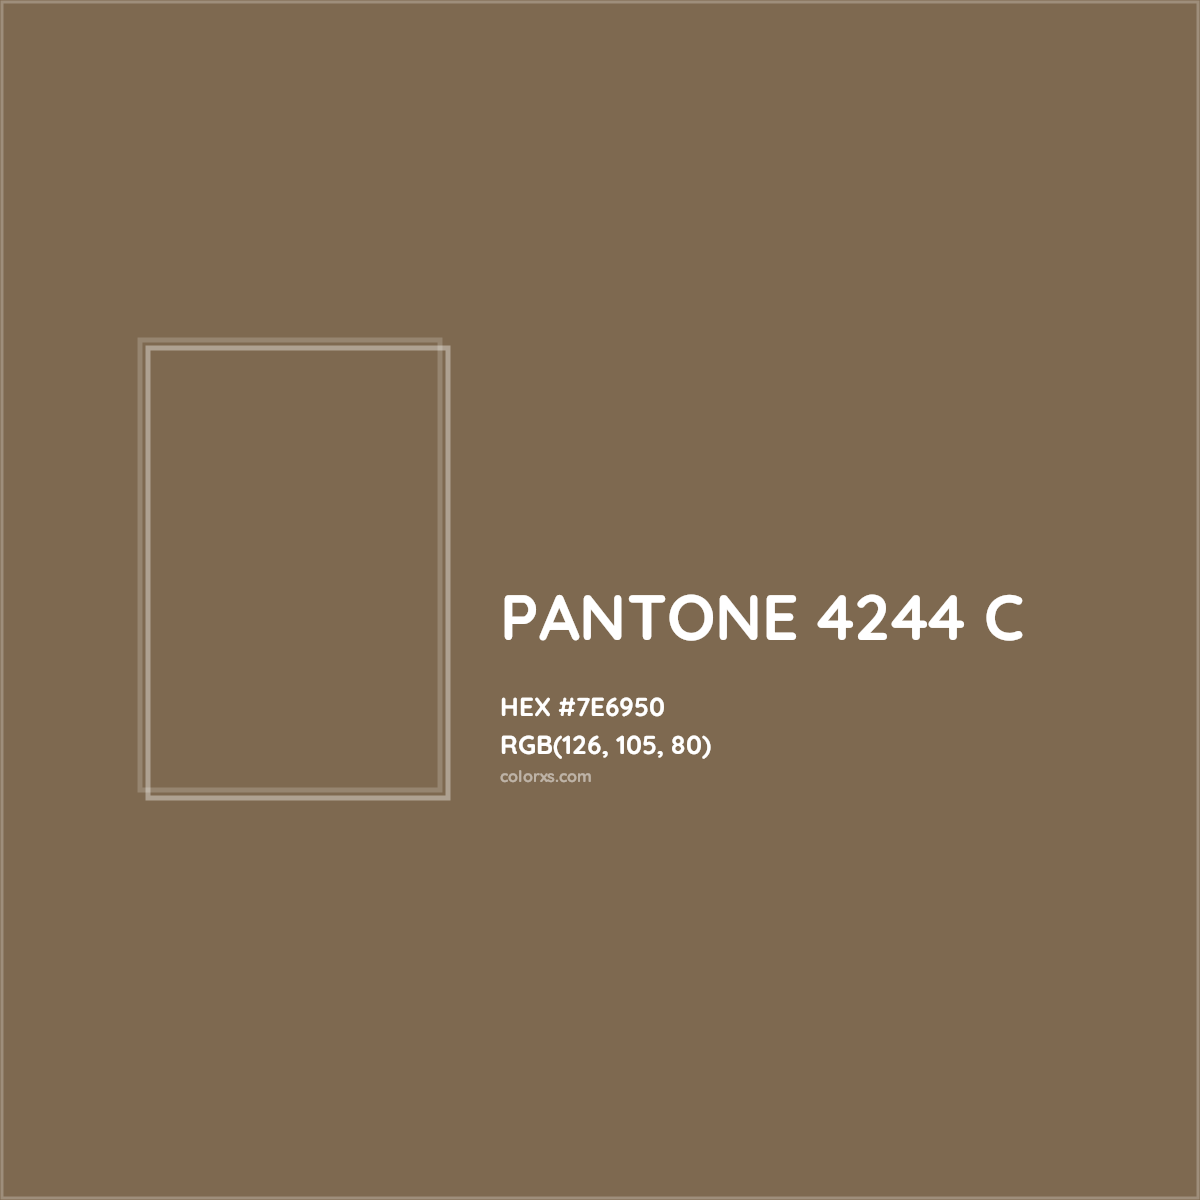 HEX #7E6950 PANTONE 4244 C CMS Pantone PMS - Color Code